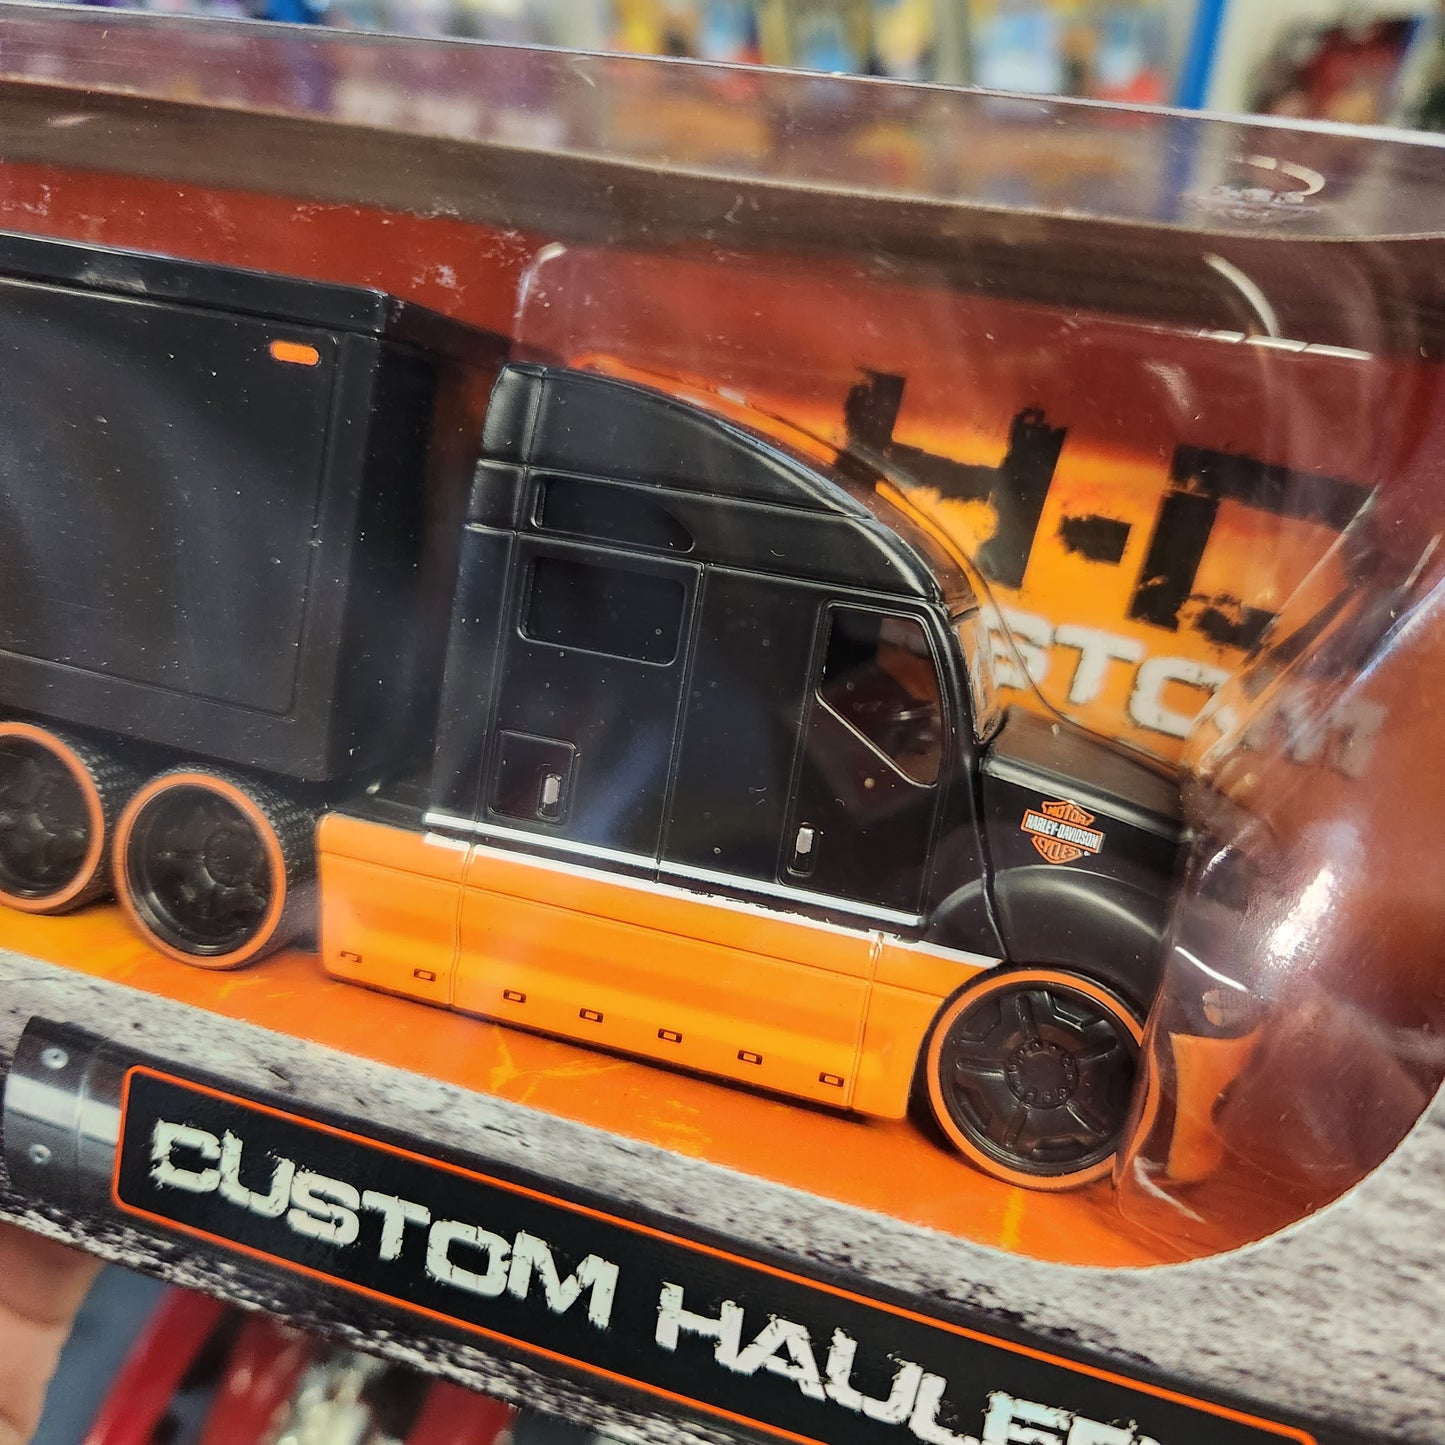 Maisto - 'Harley Davidson' Custom Haulers (Black/Orange Cab)